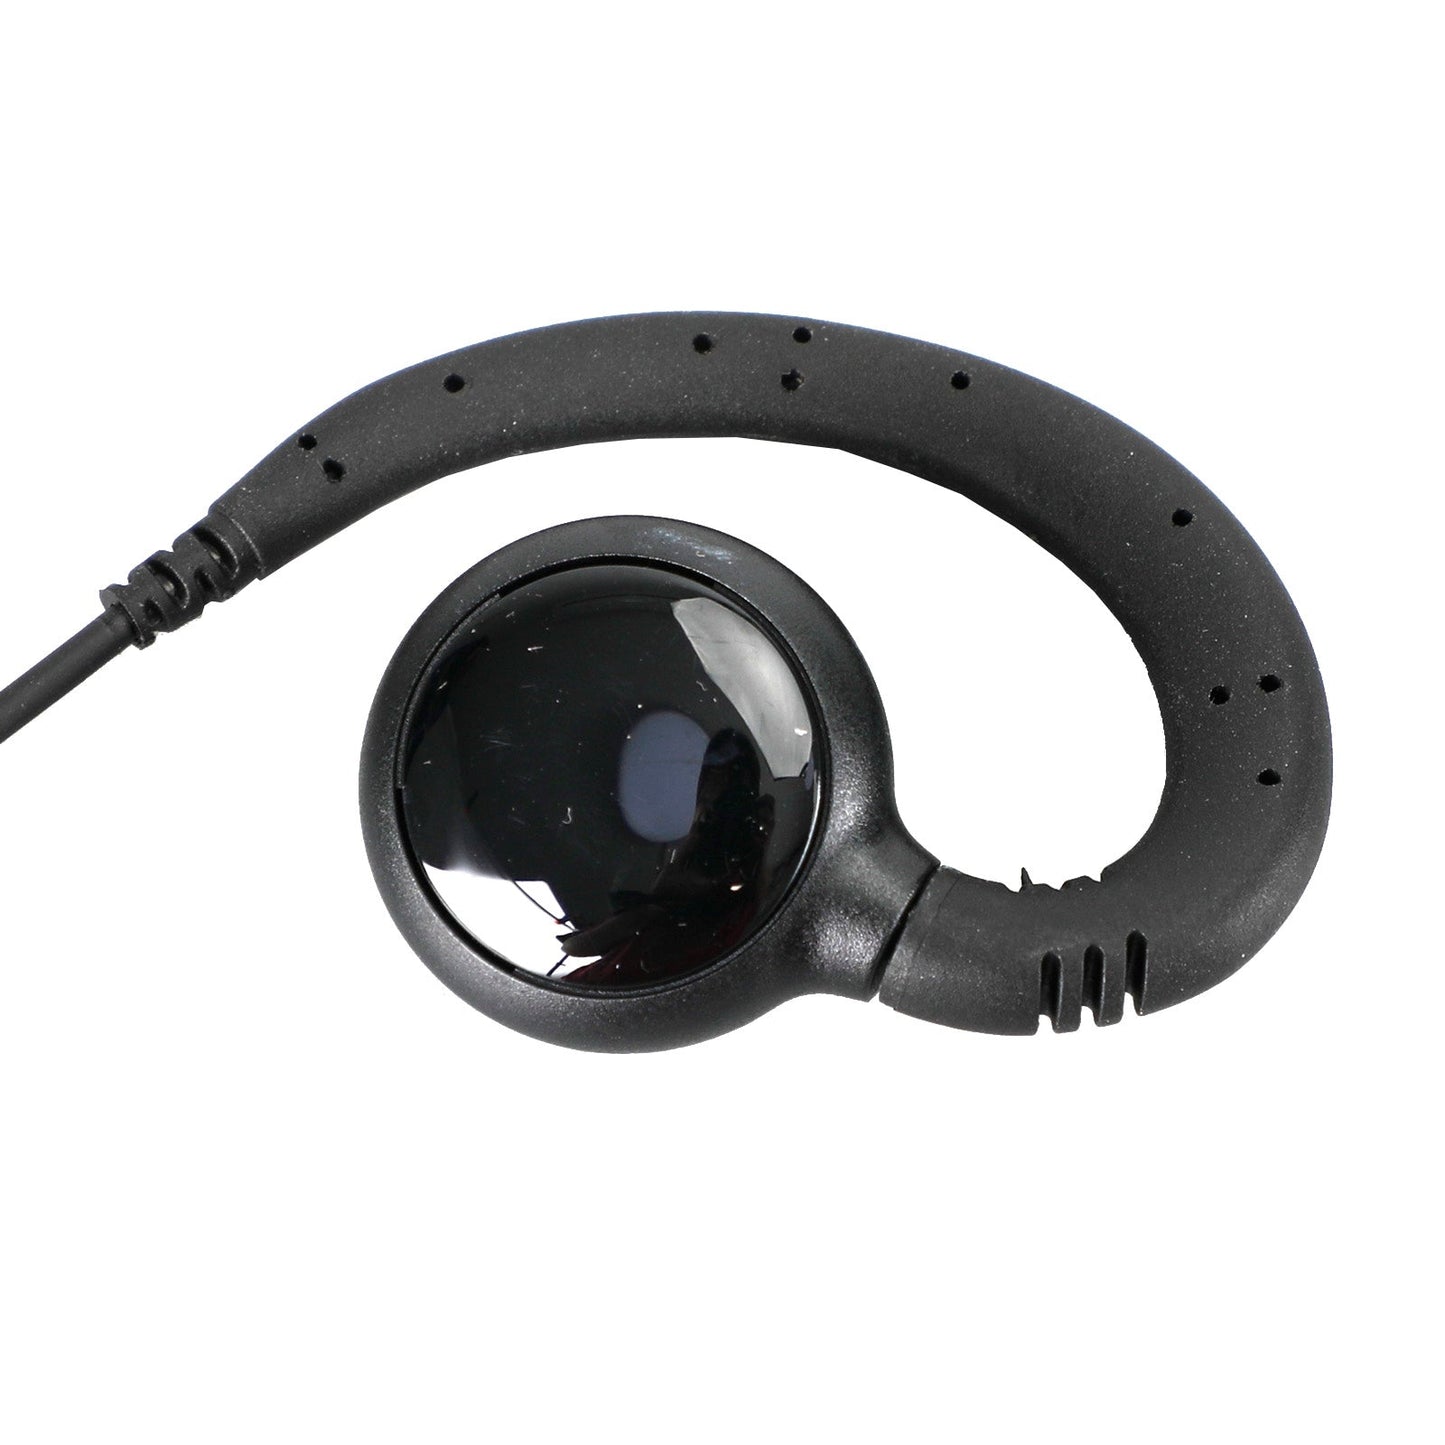 Headset Oval PTT in one Walkie-Talkie For CLP108 CLP1010 CLP1040 CLP1060